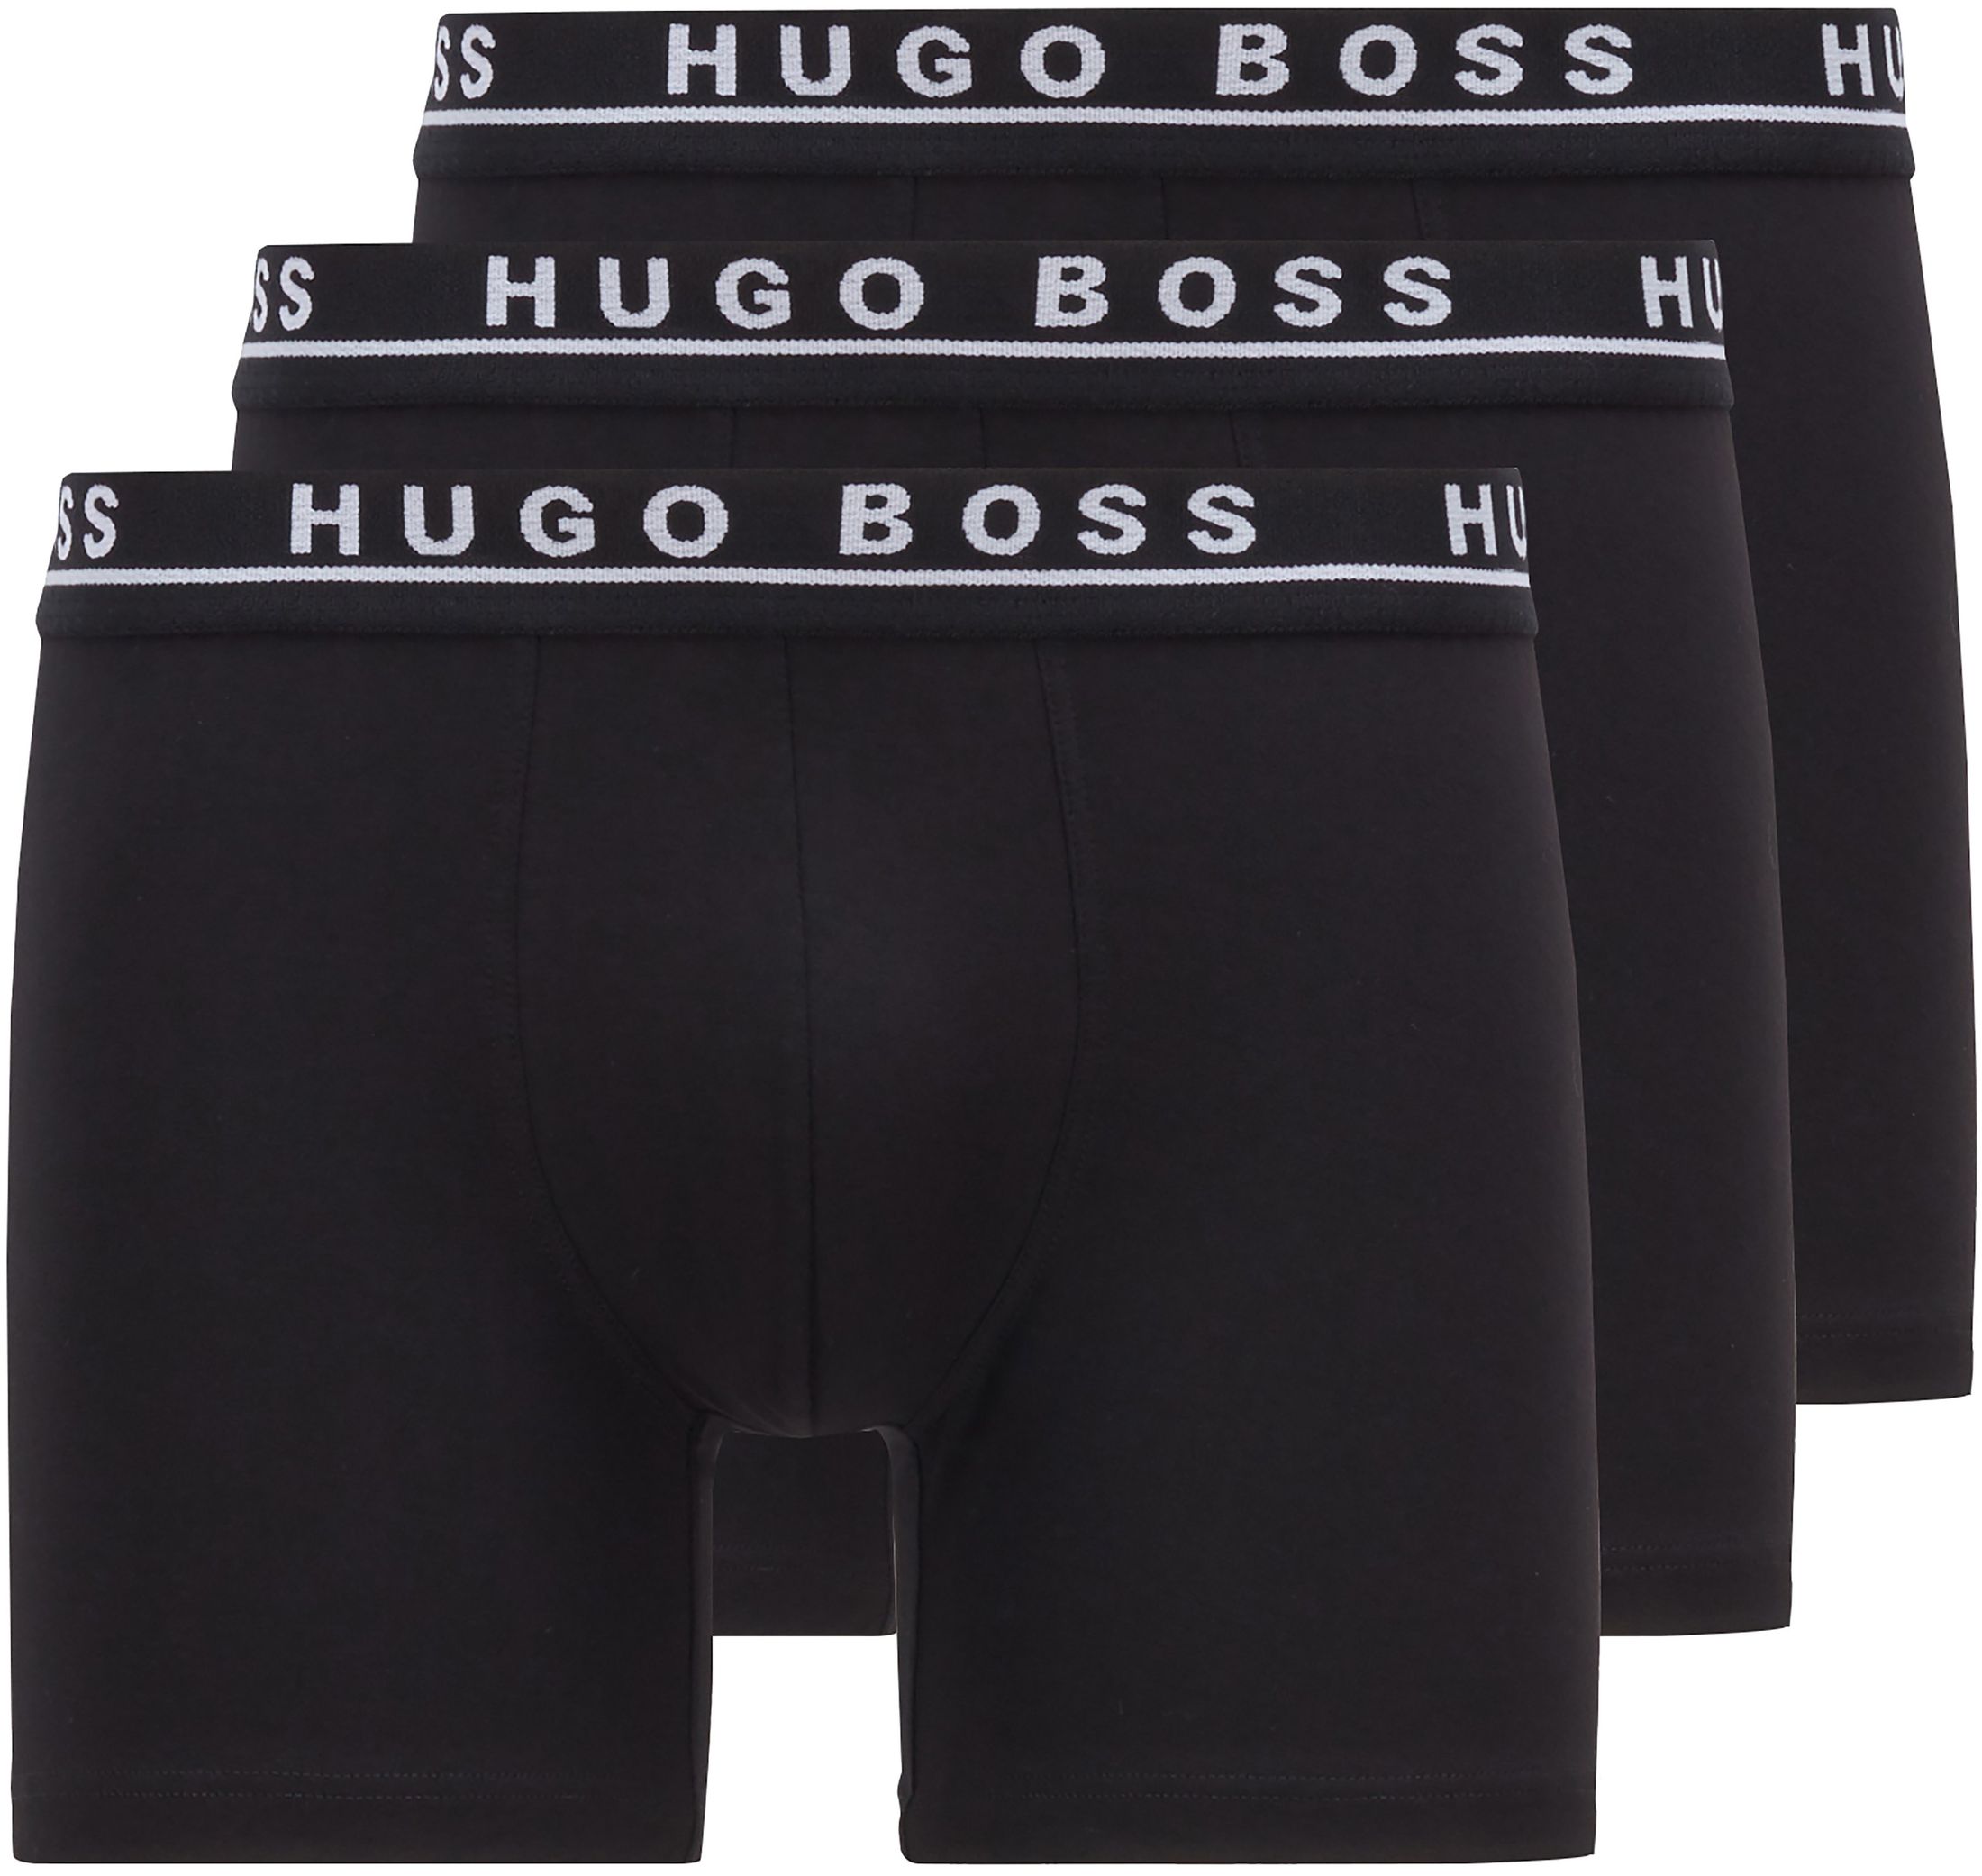 Hugo Boss Boxer Shorts Brief 3-Pack Black size M